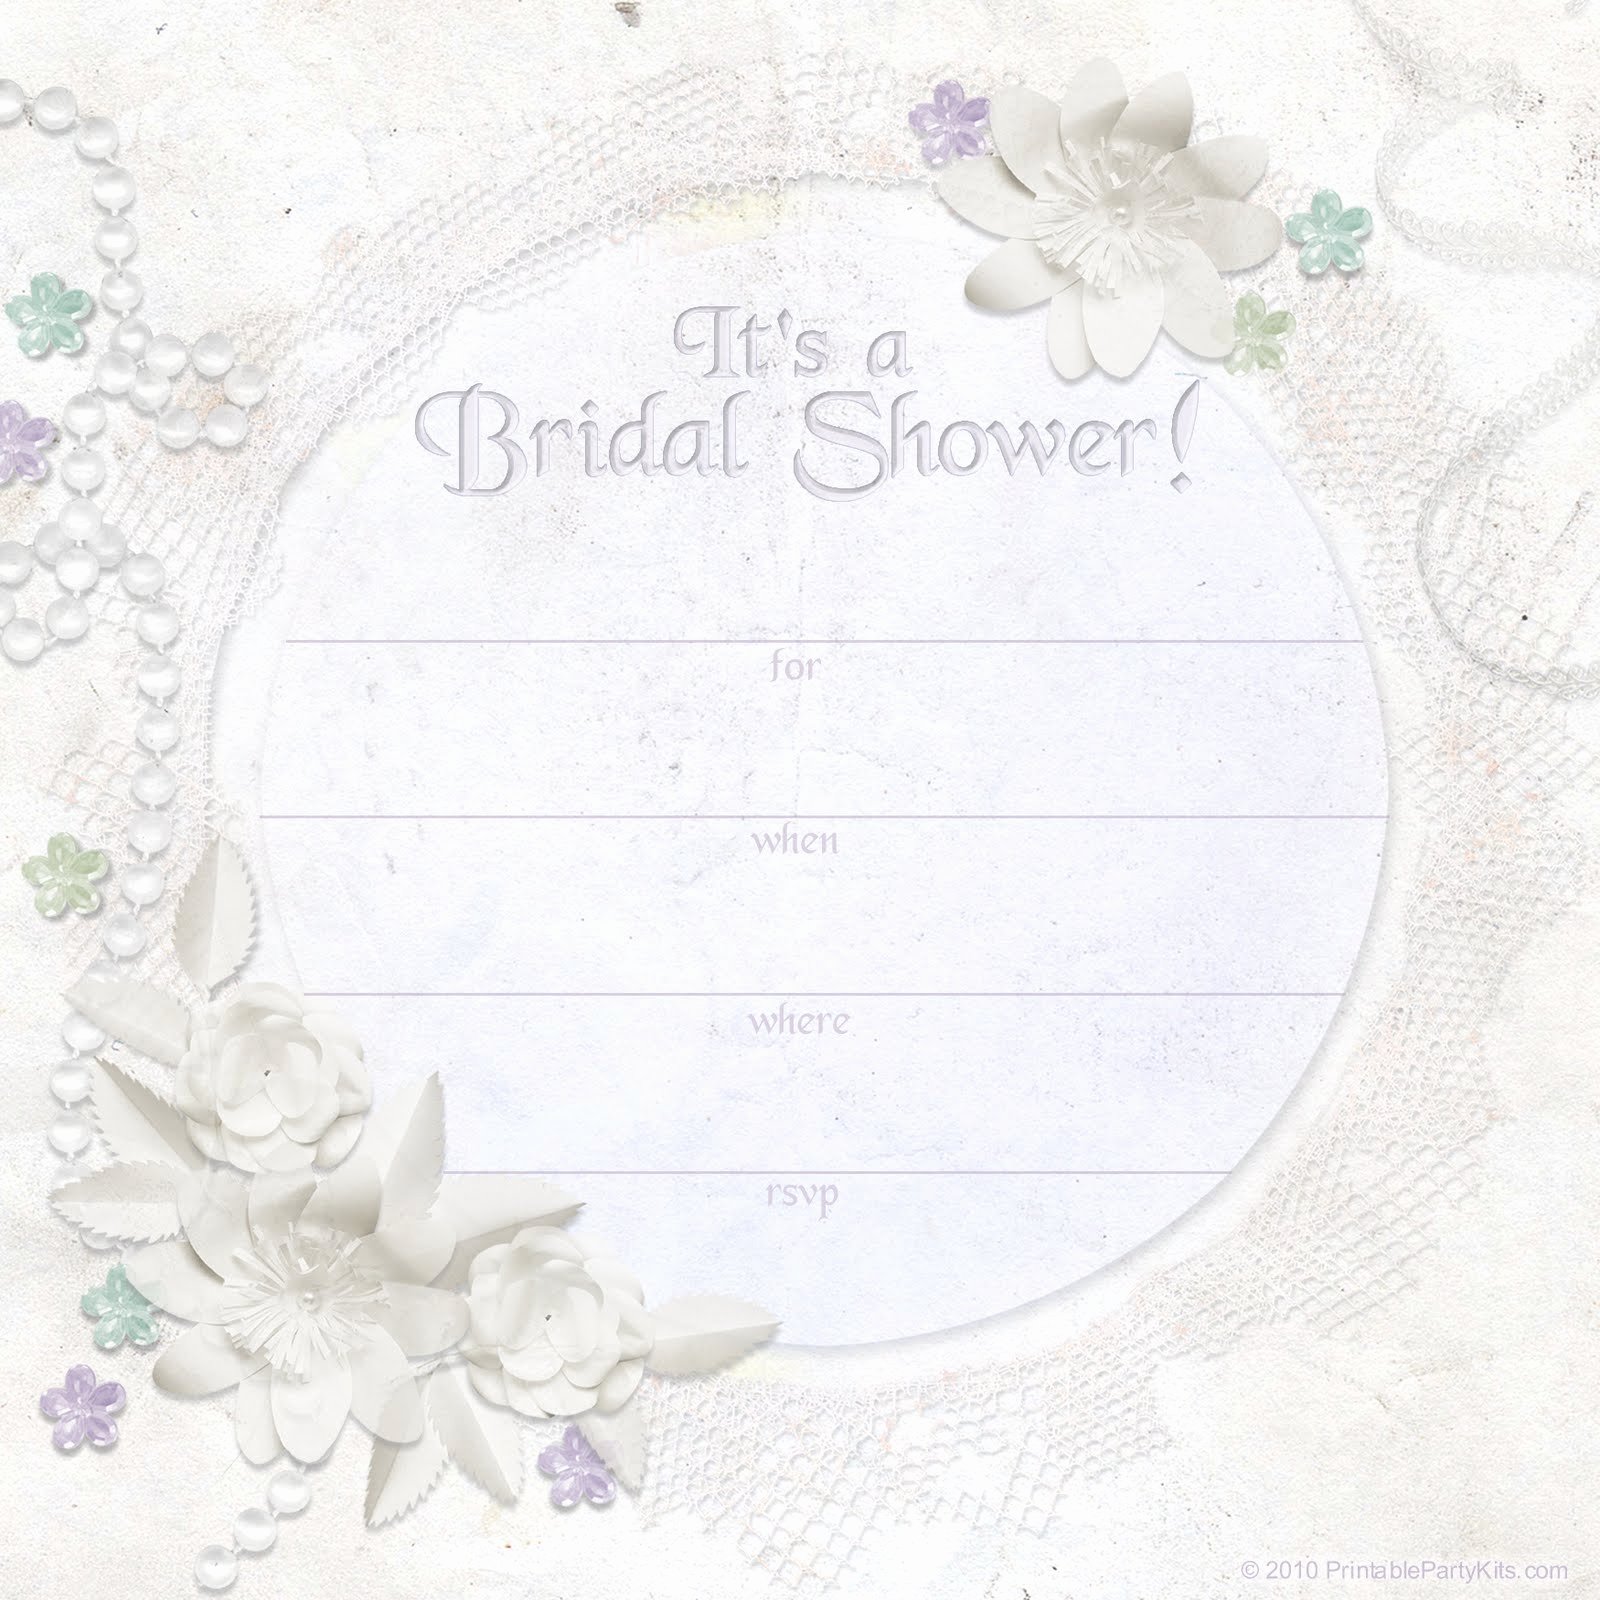 Bridal Shower Invite Template Inspirational Free Bridal Shower Invitation Templates